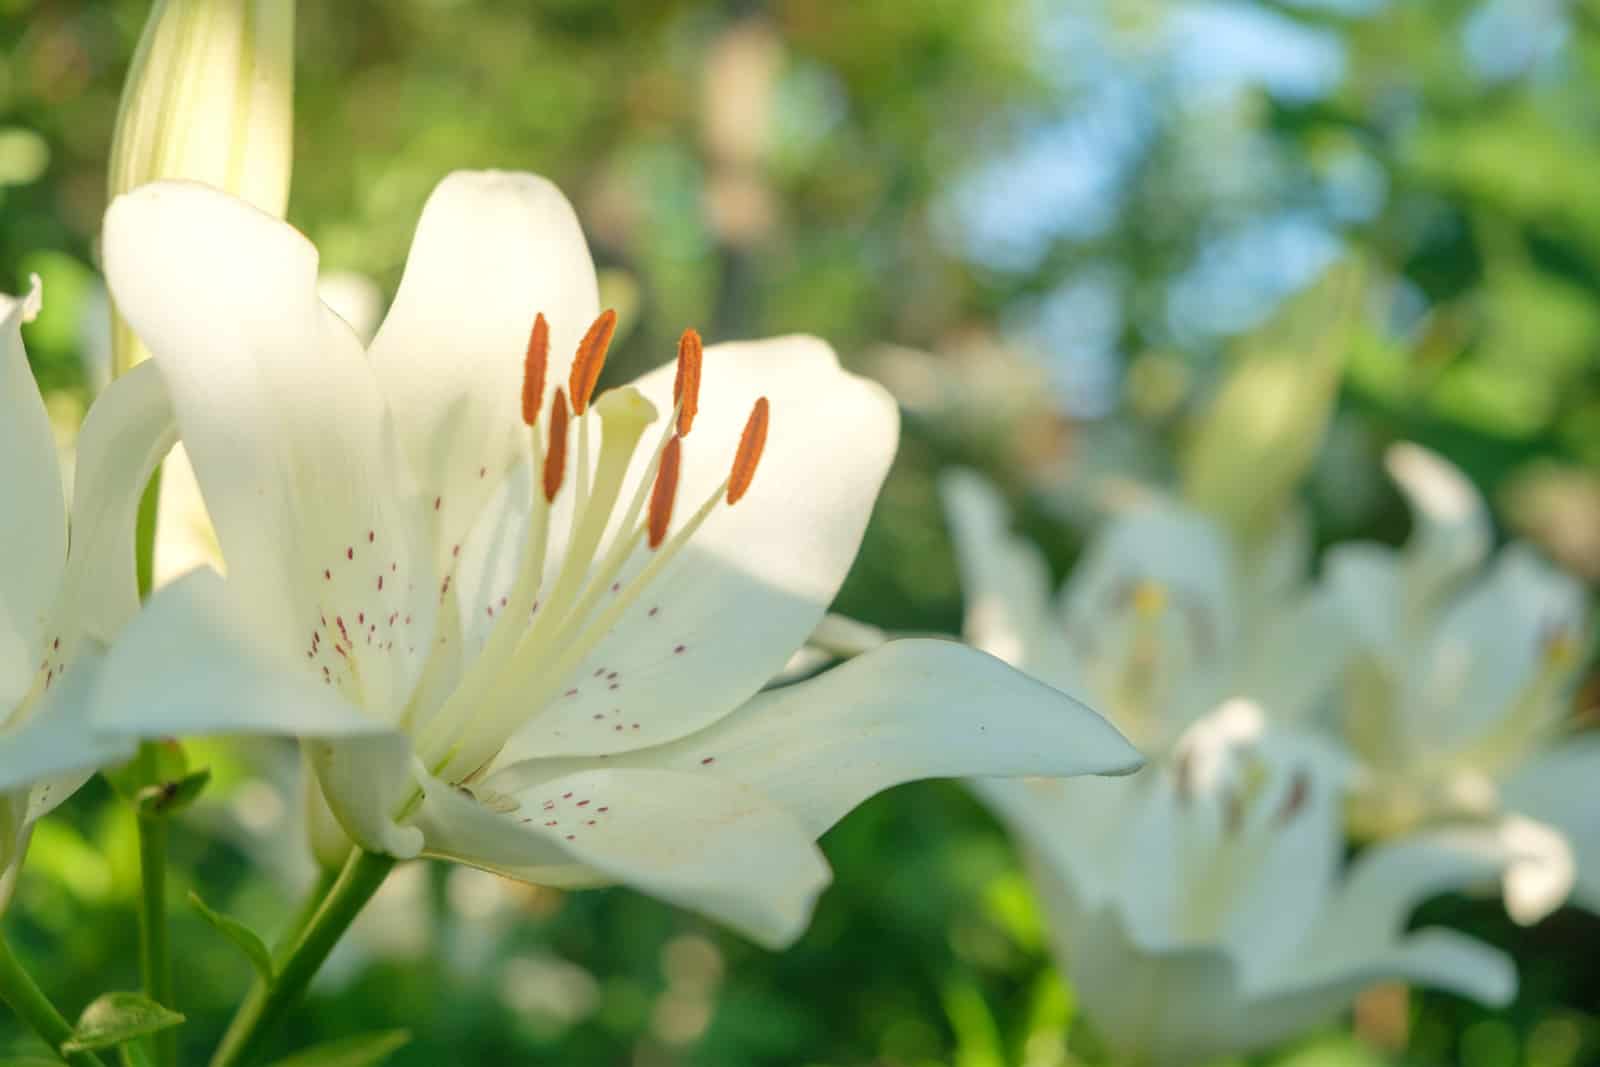 Shrub of white lily, a companion plant for roses